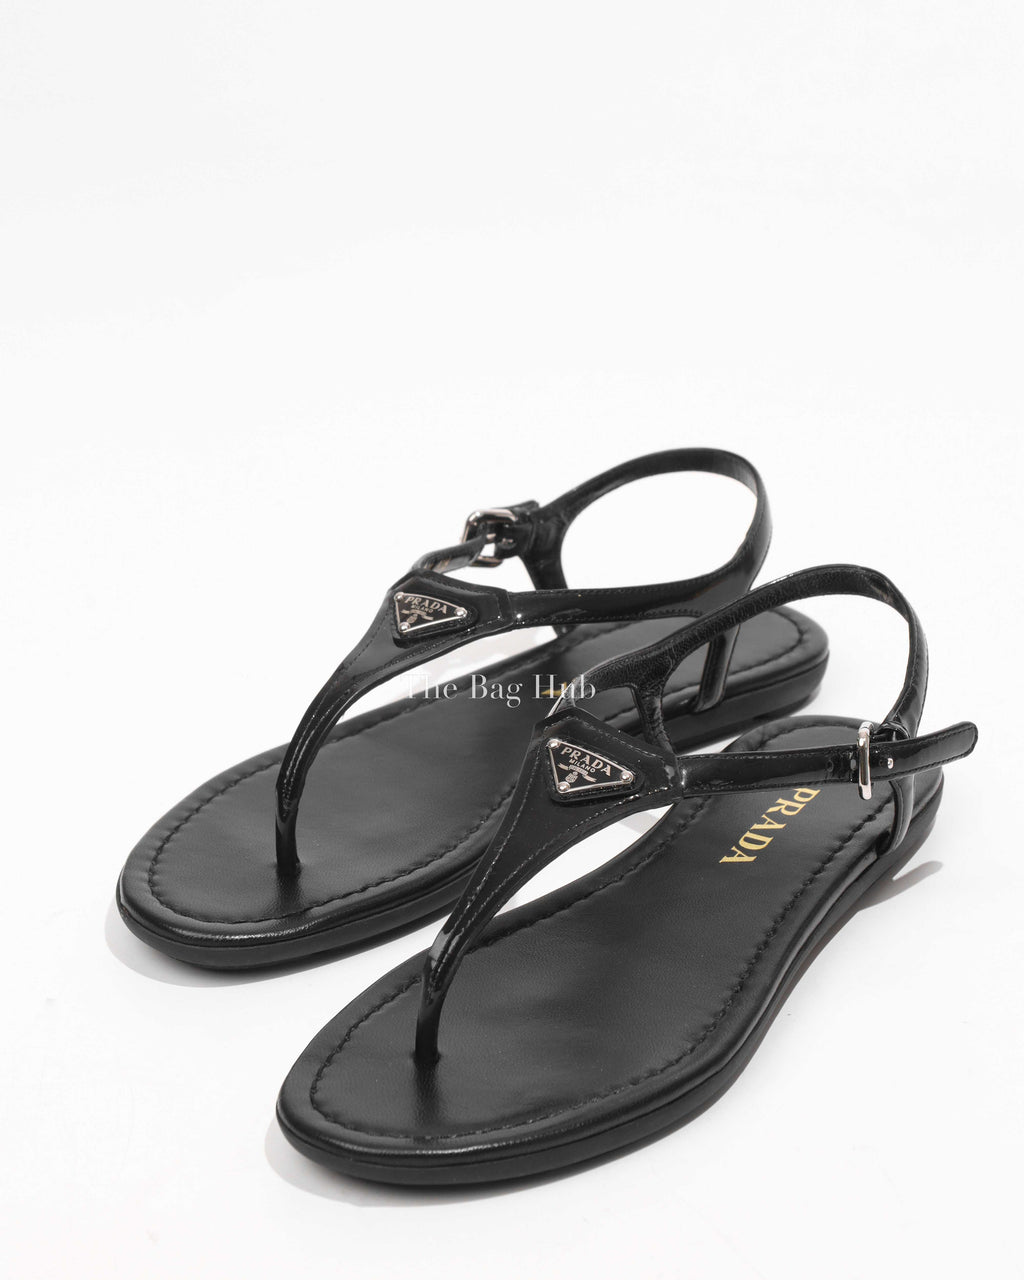 Prada Nero Calzature Donna Vernice Sandals Size 37.5 1Y450F-1